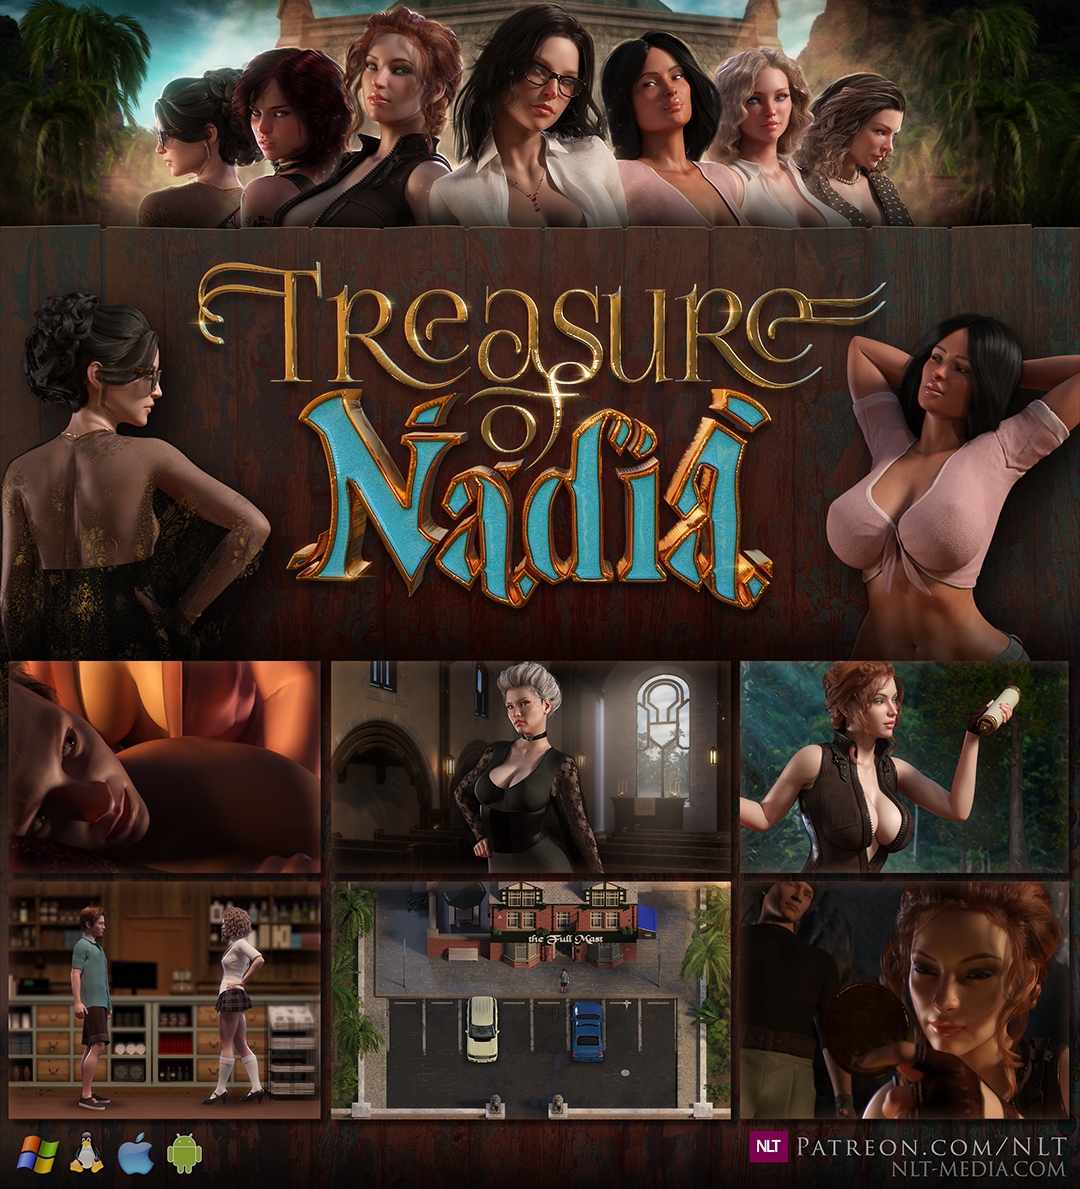 Treasures of nadia